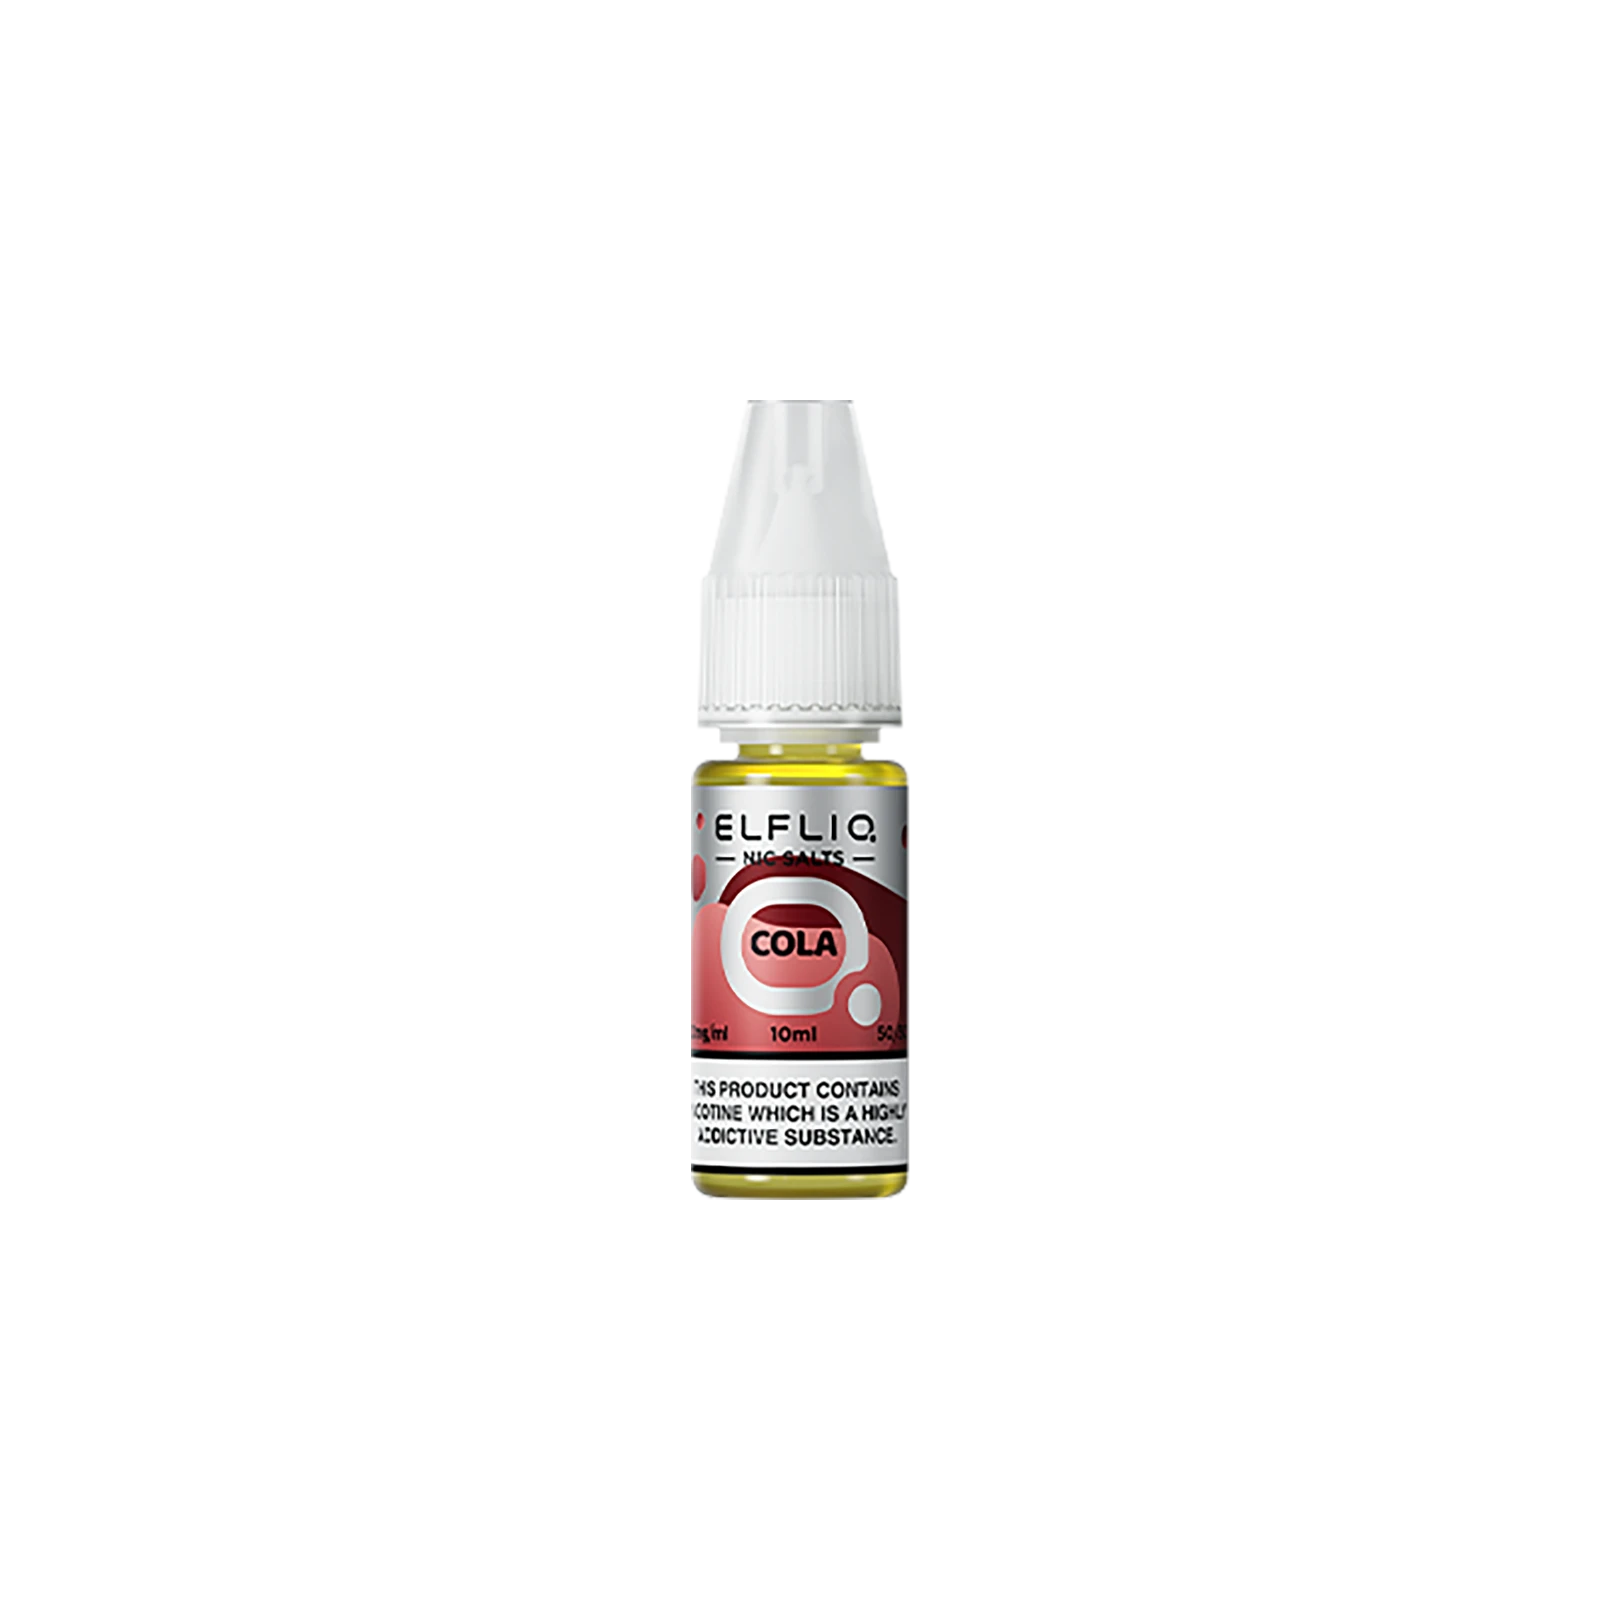 ElfliQ - Cola - 20 mg | E-Zigaretten Liquid von Elf Bar kaufen2